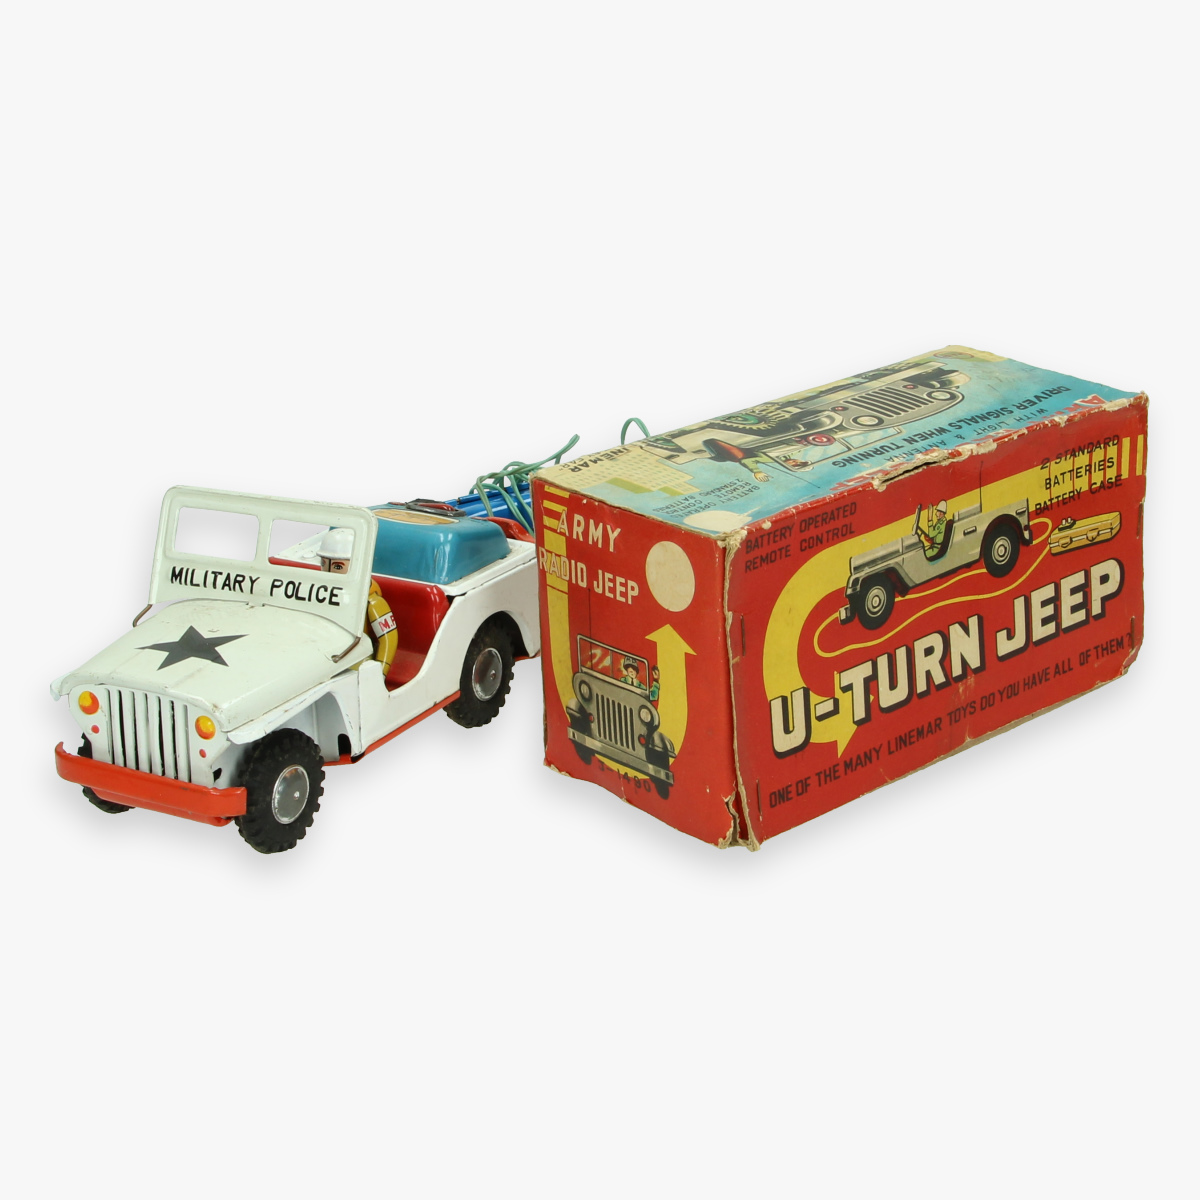 Afbeeldingen van u-turn tin toy jeep (willy's) boxed linemar trade mark